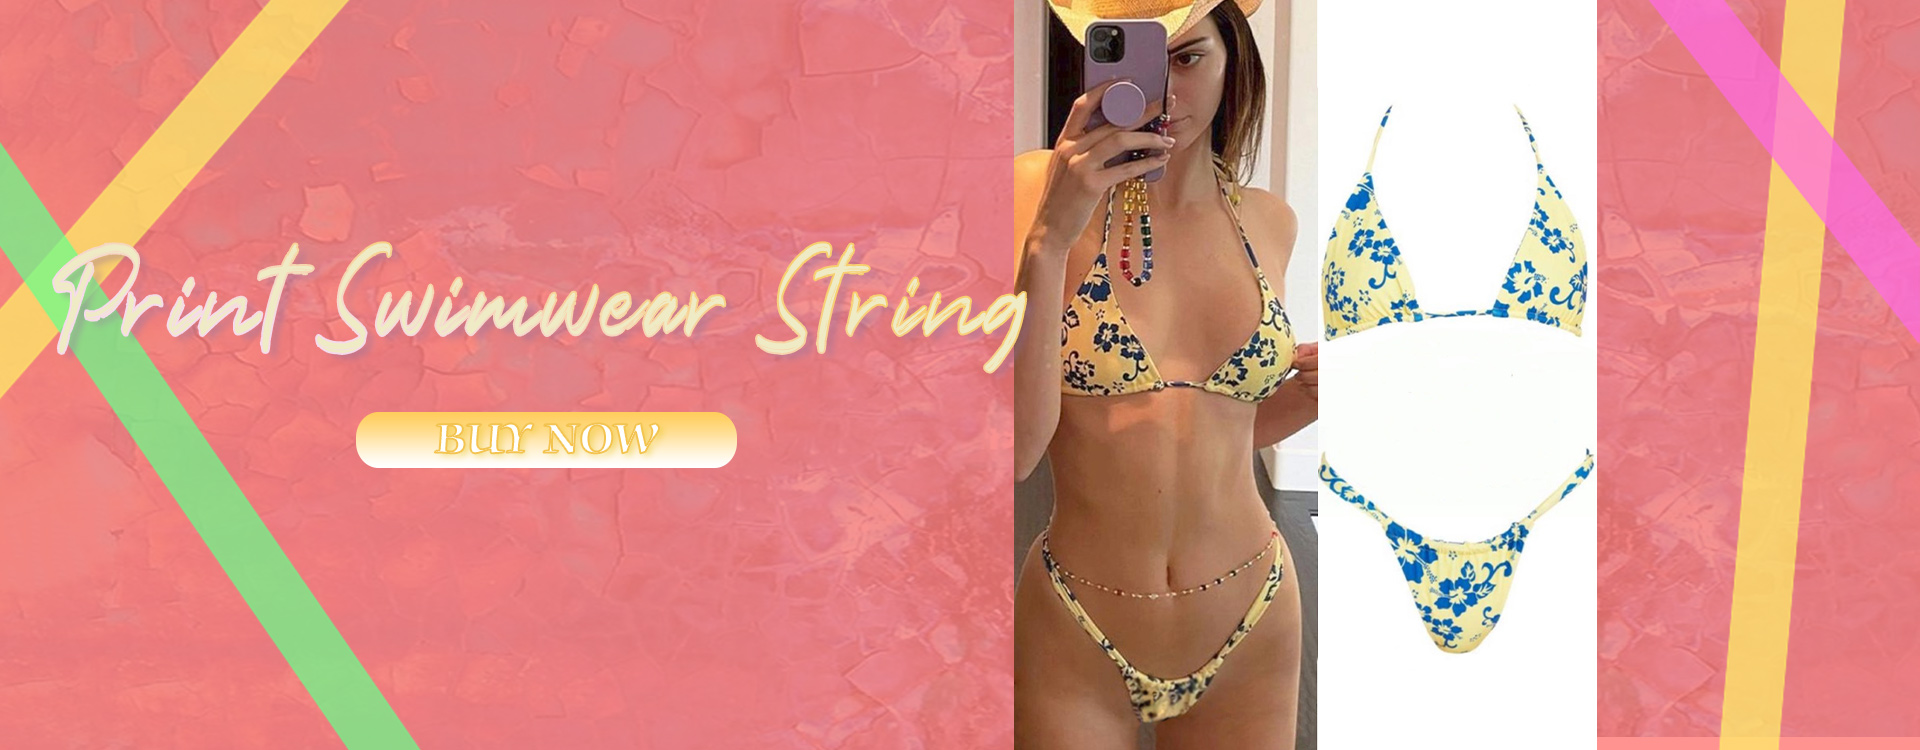 Sexy Women Micro G-String Underwear Bikini Set Bra Top Thong Lingerie  Swimw~YN